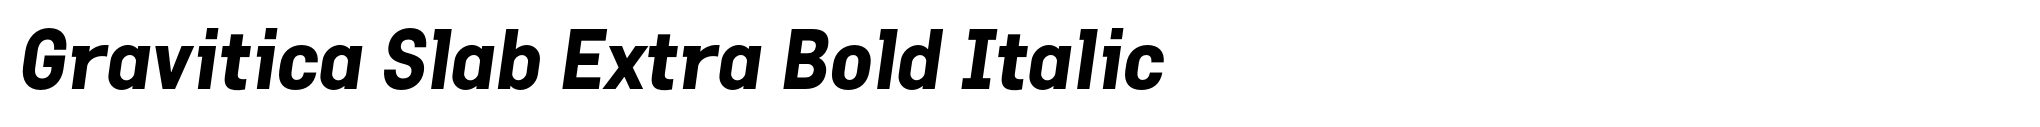 Gravitica Slab Extra Bold Italic image